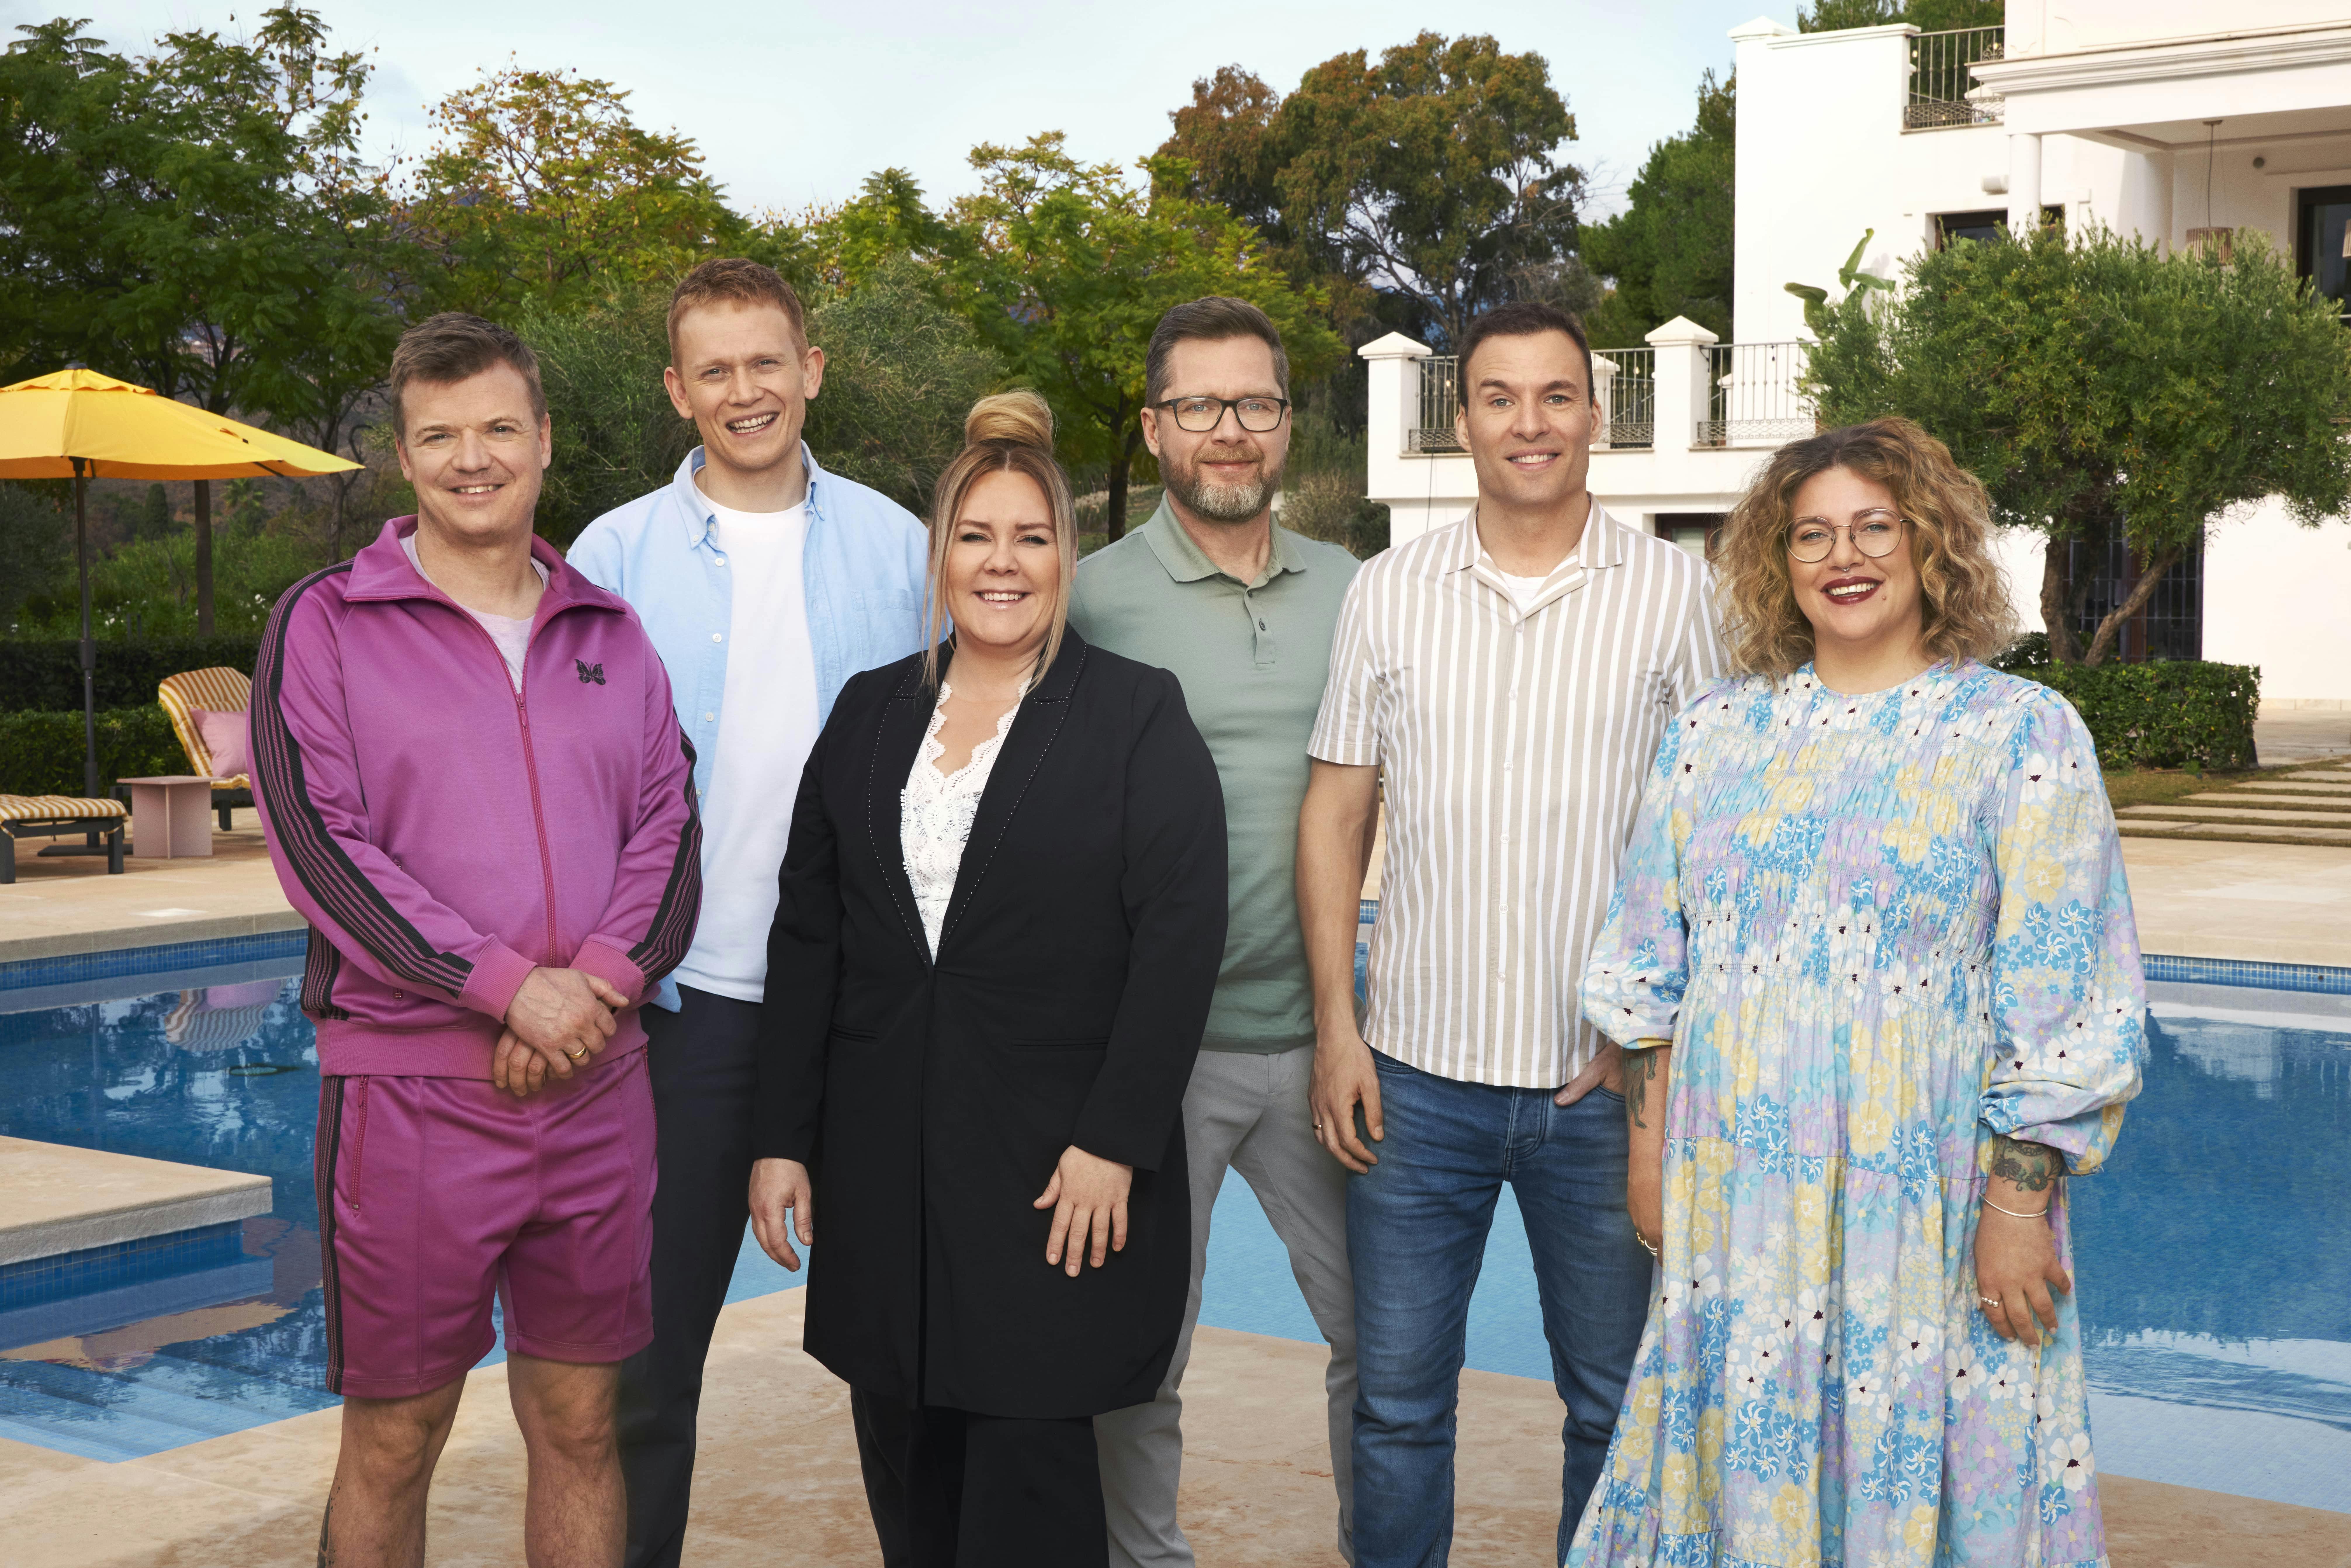 Linda P er vært, når fem danske komikere på skift skal grilles i et nyt tv-program.